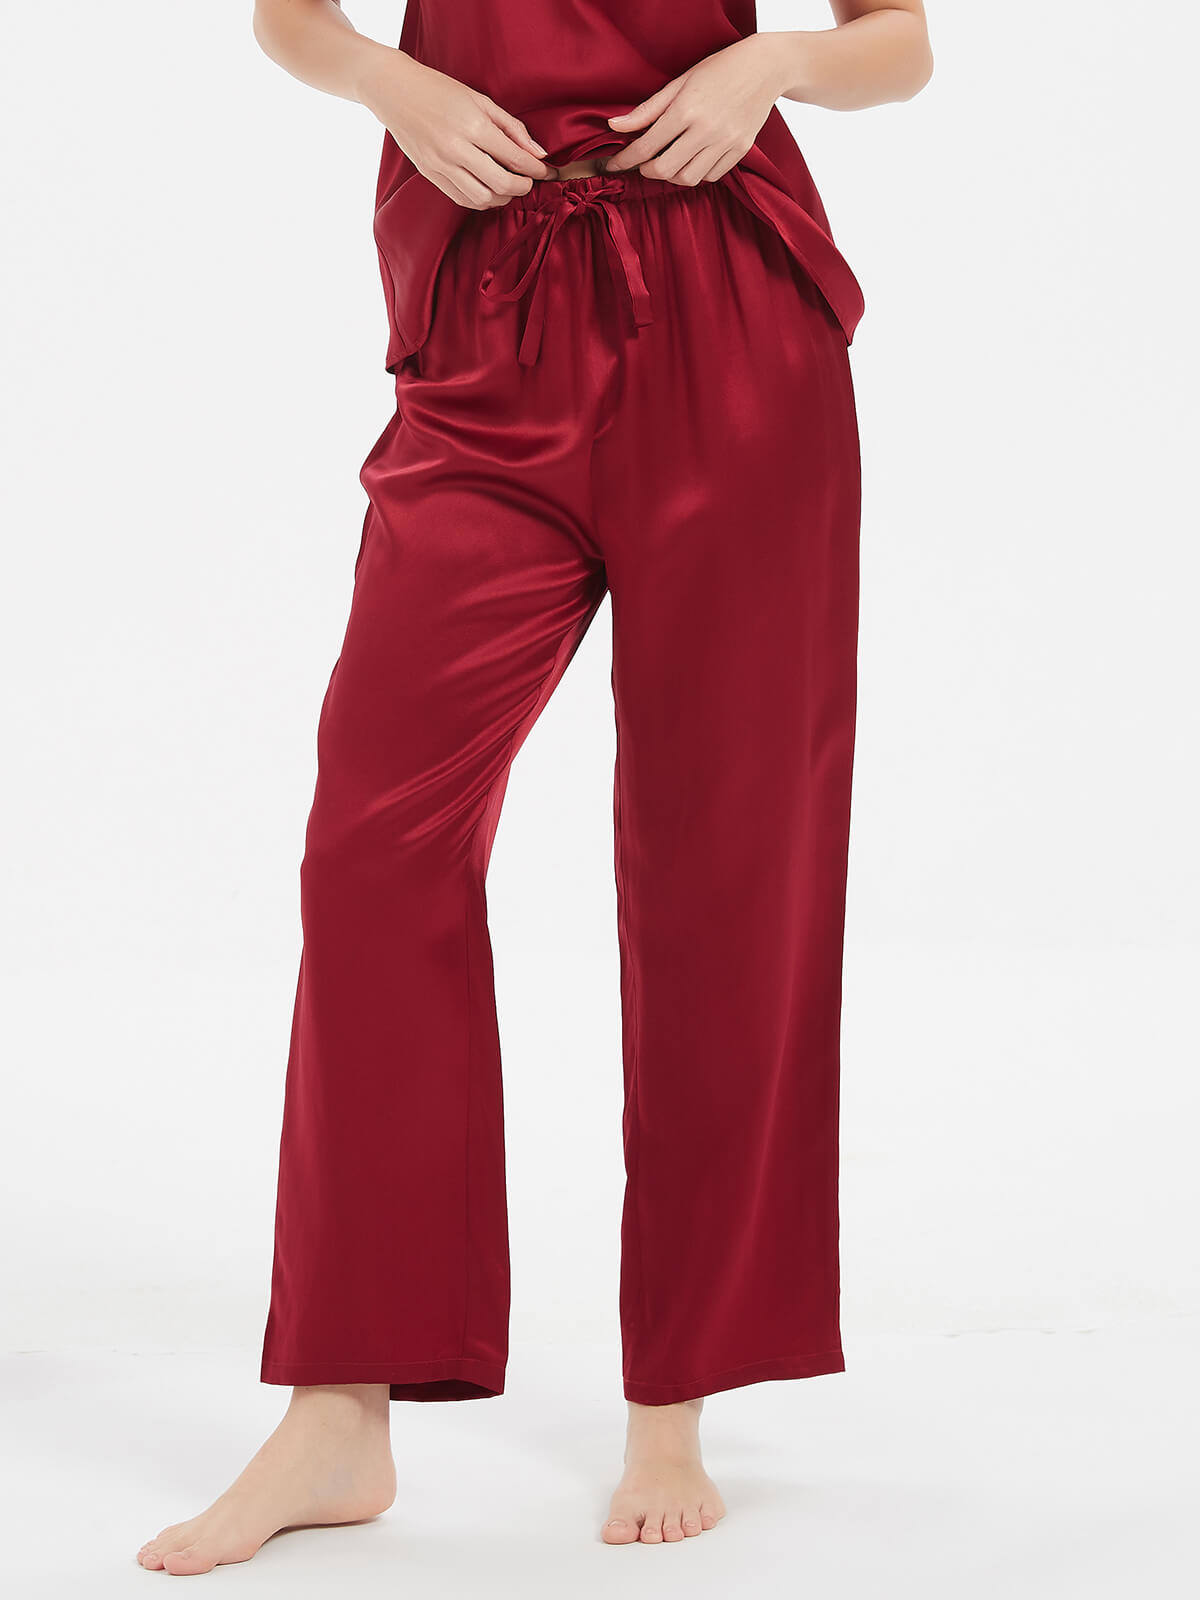 19 Momme Women Classic Silk Camisole Pants Pajama Set